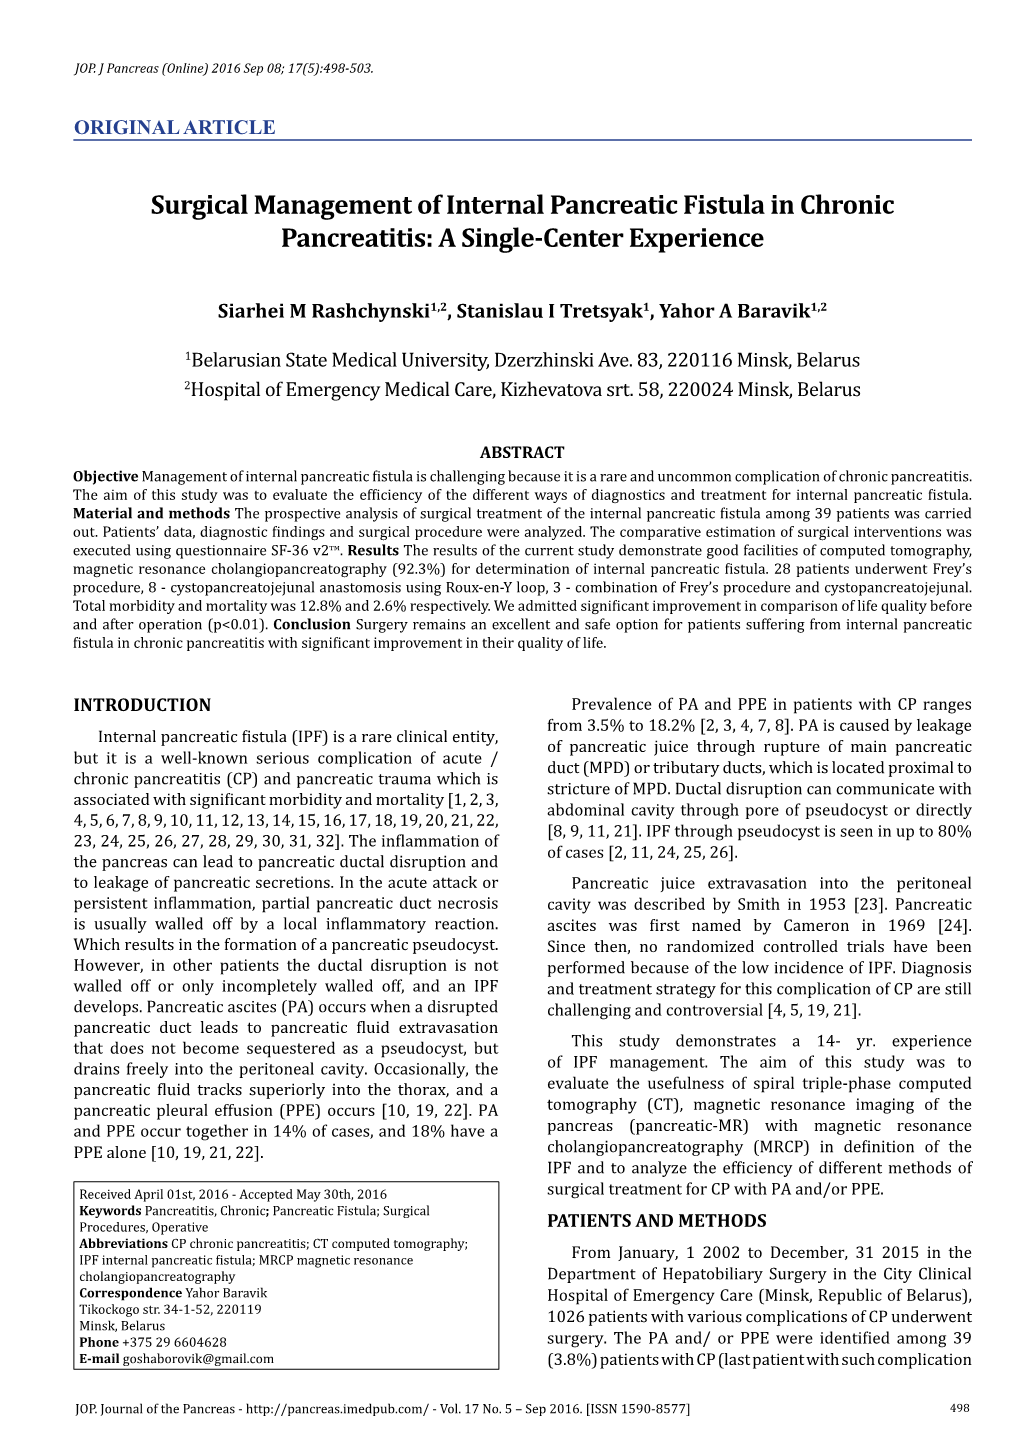 Surgical Management of Internal Pancreatic Fistula in Chronic Pancreatitis: a Single-Center Experience